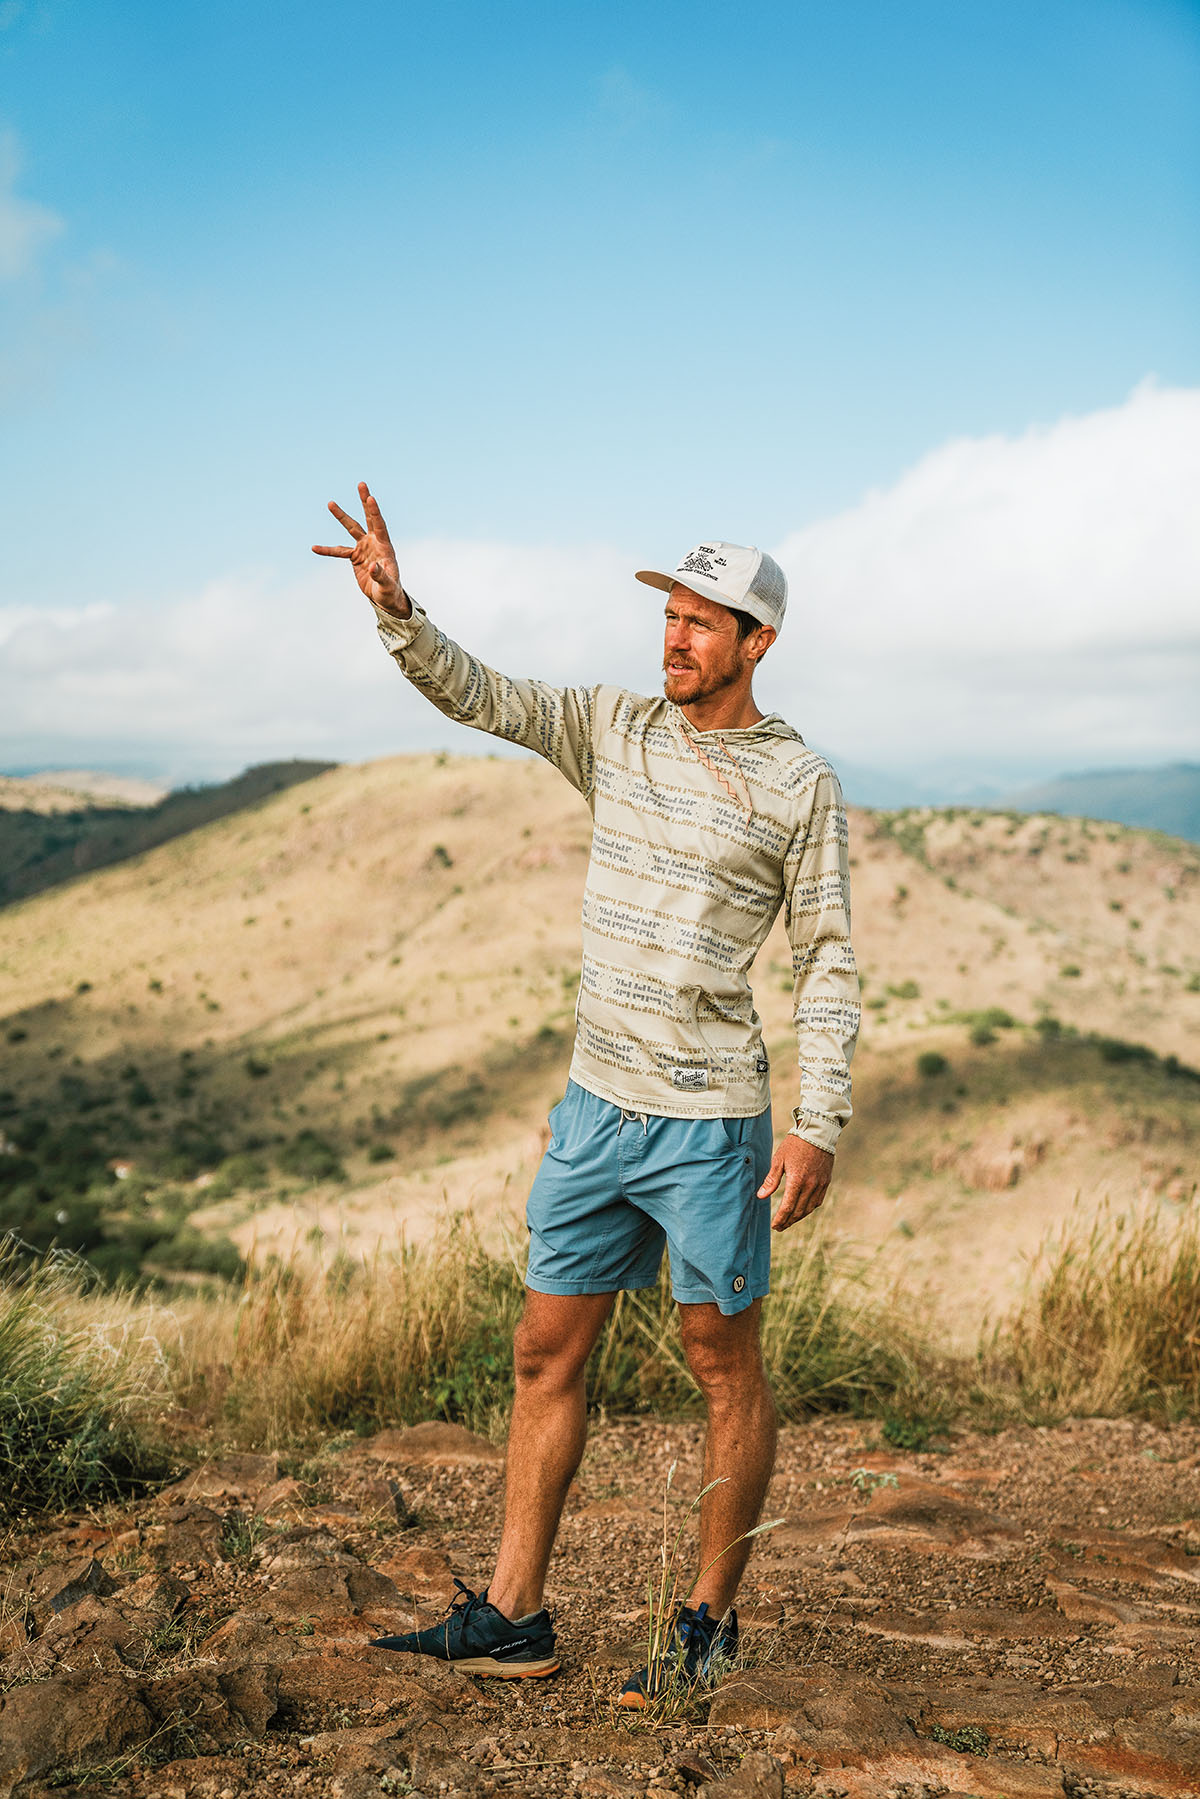 A man wearing a baseball cap and shorts stands in a desert mountain environment